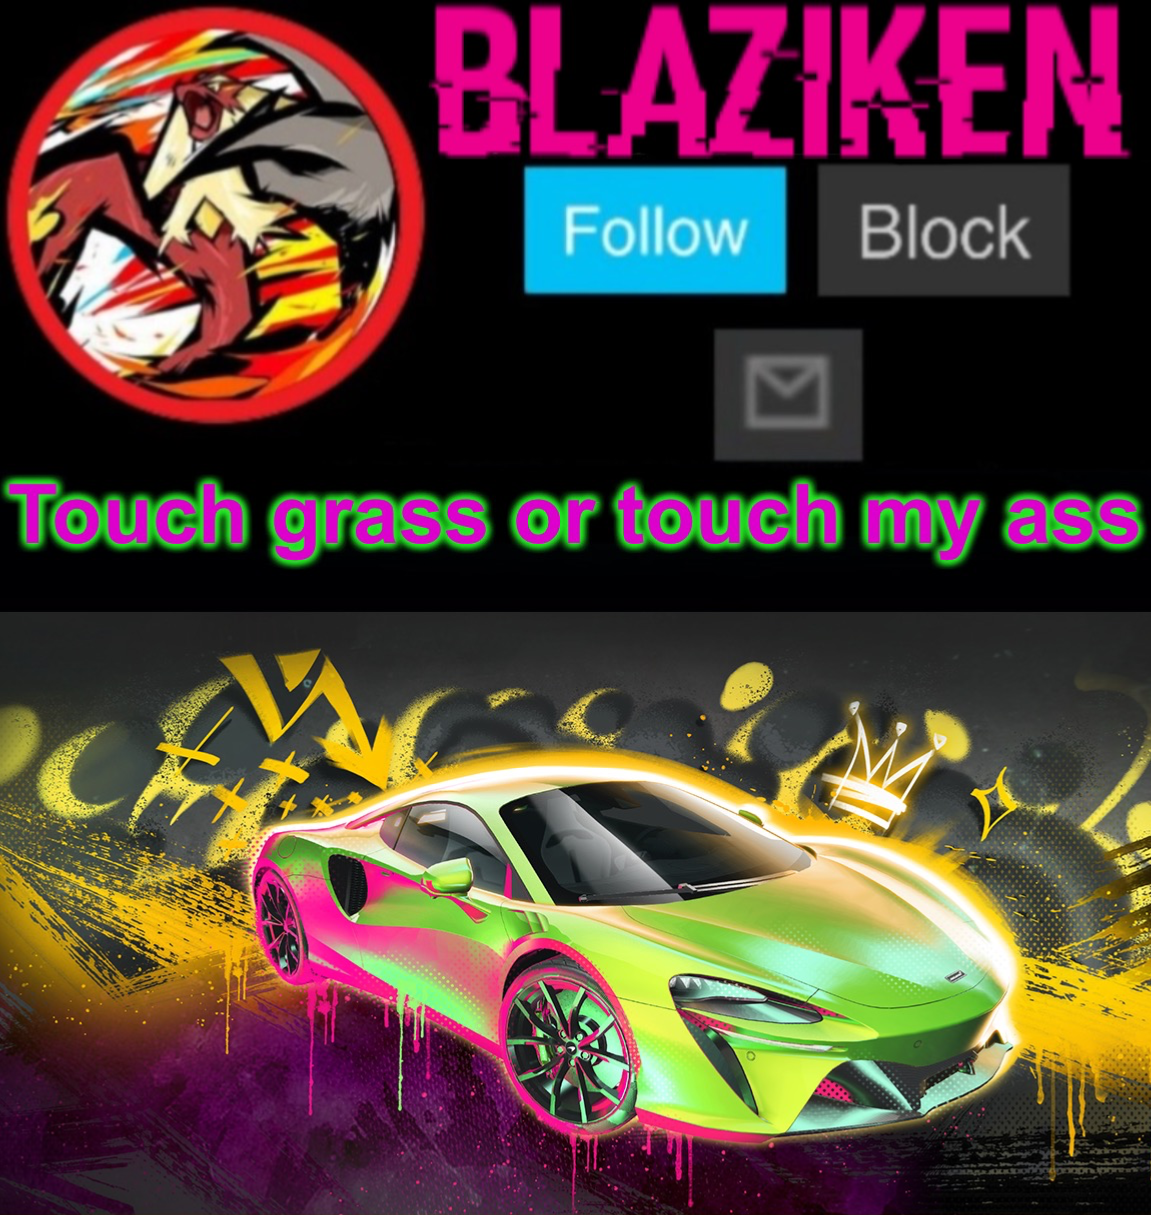 Blaziken announcement temp (car) Blank Meme Template